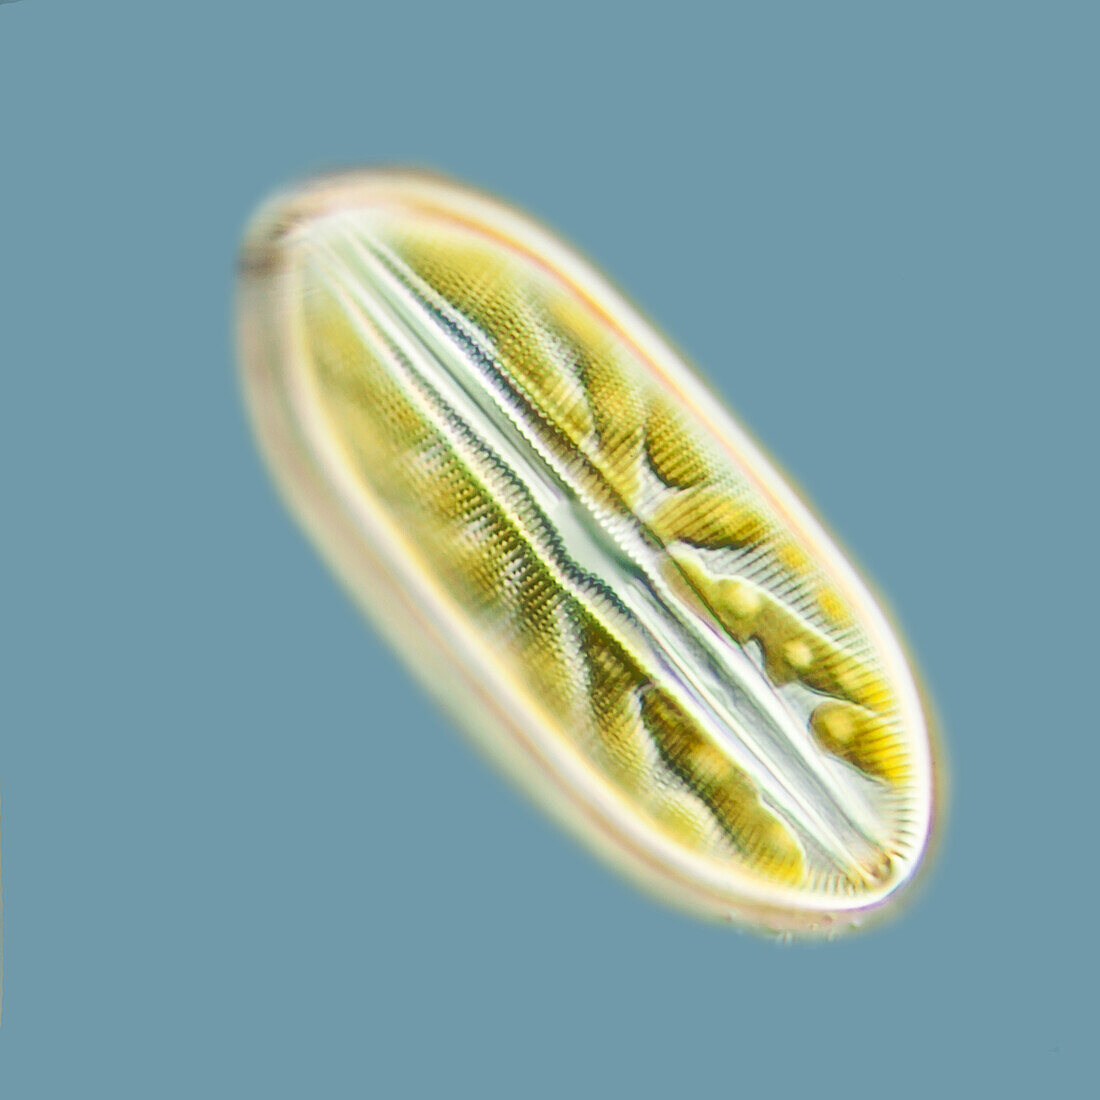 Diploneis freshwater diatom, light micrograph